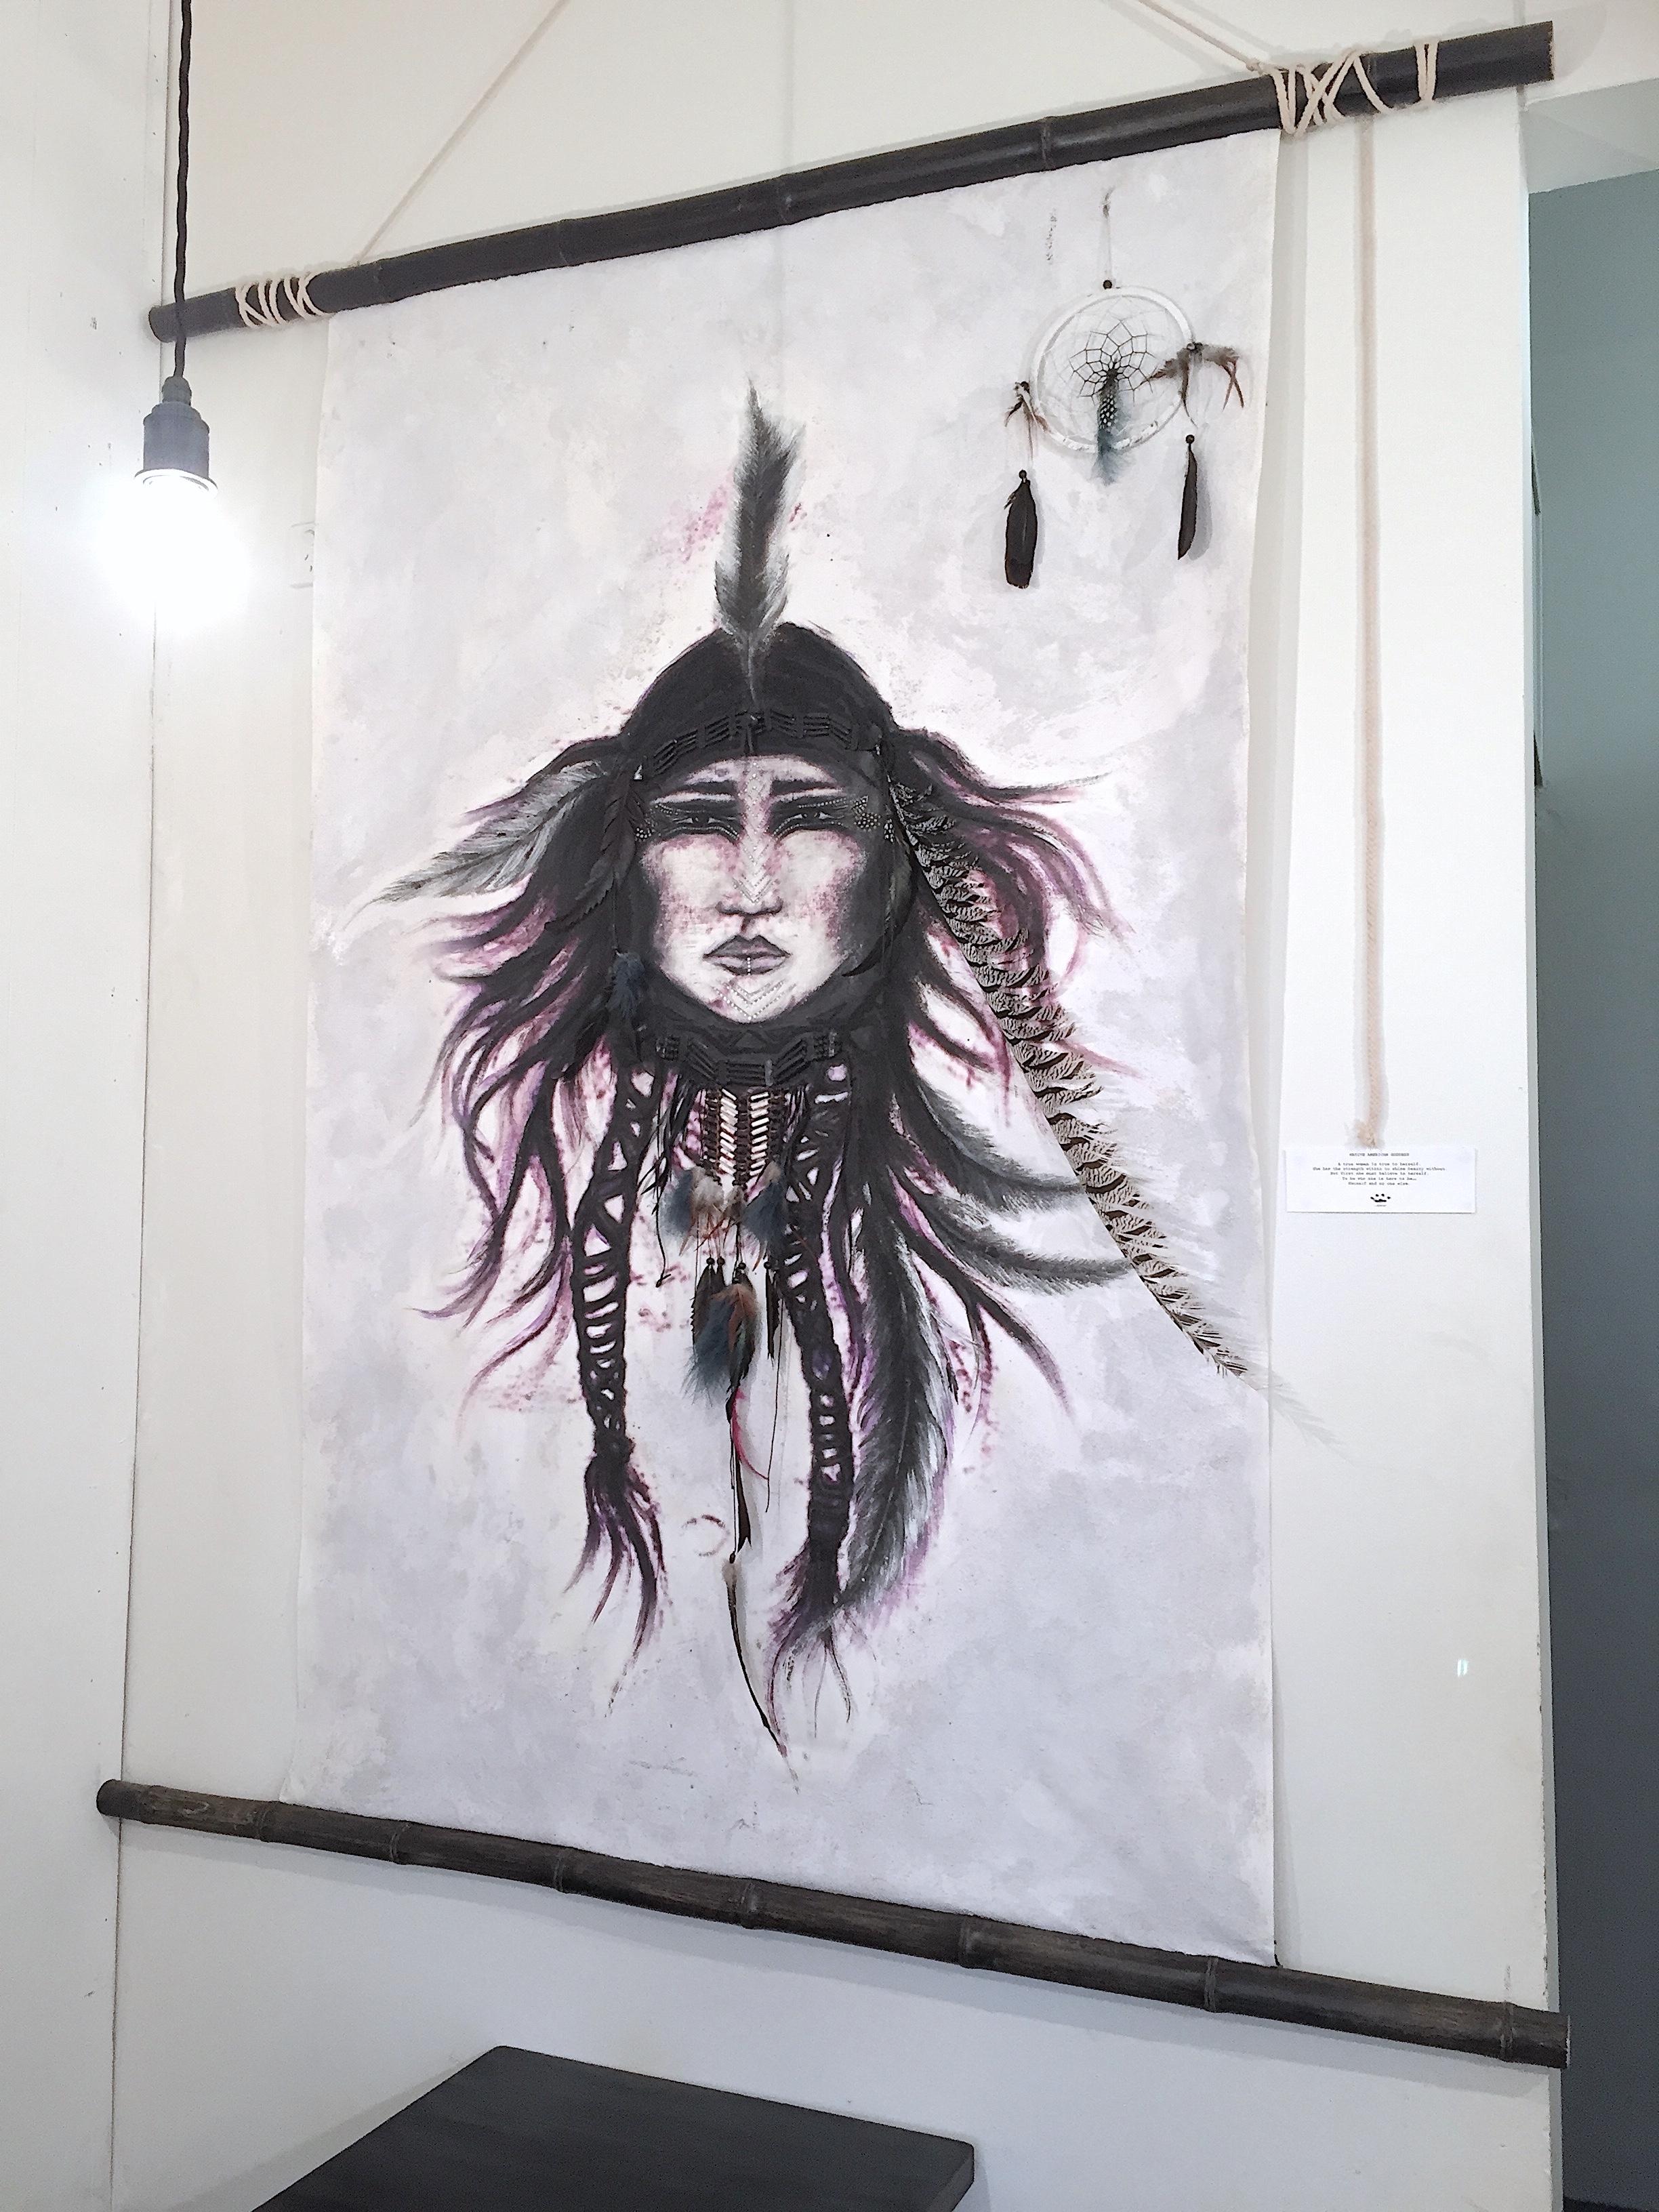 Native American Goddess sold